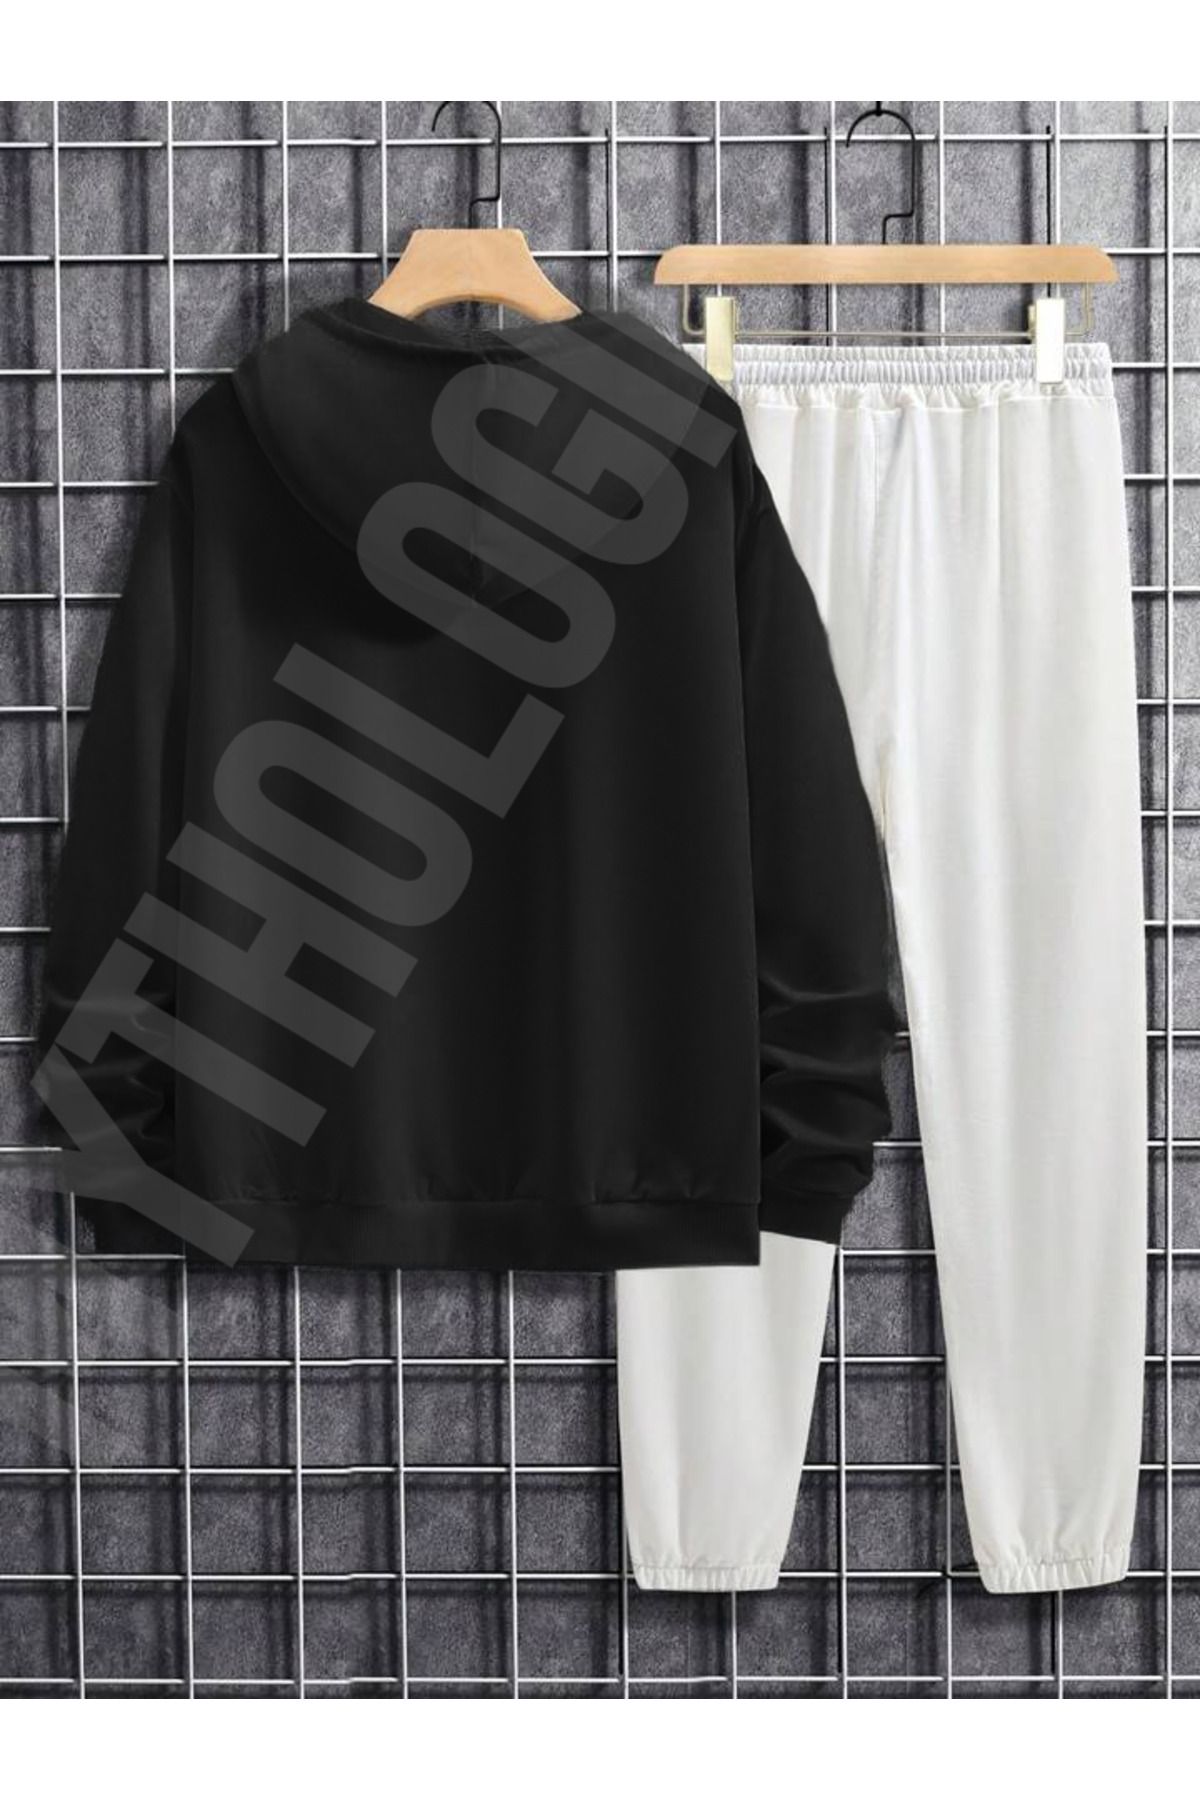 Mythologie Paris Written Black Sweatshirt White Sweatpants - Printed  Elastic Leg Oversize Hoodie - Trendyol